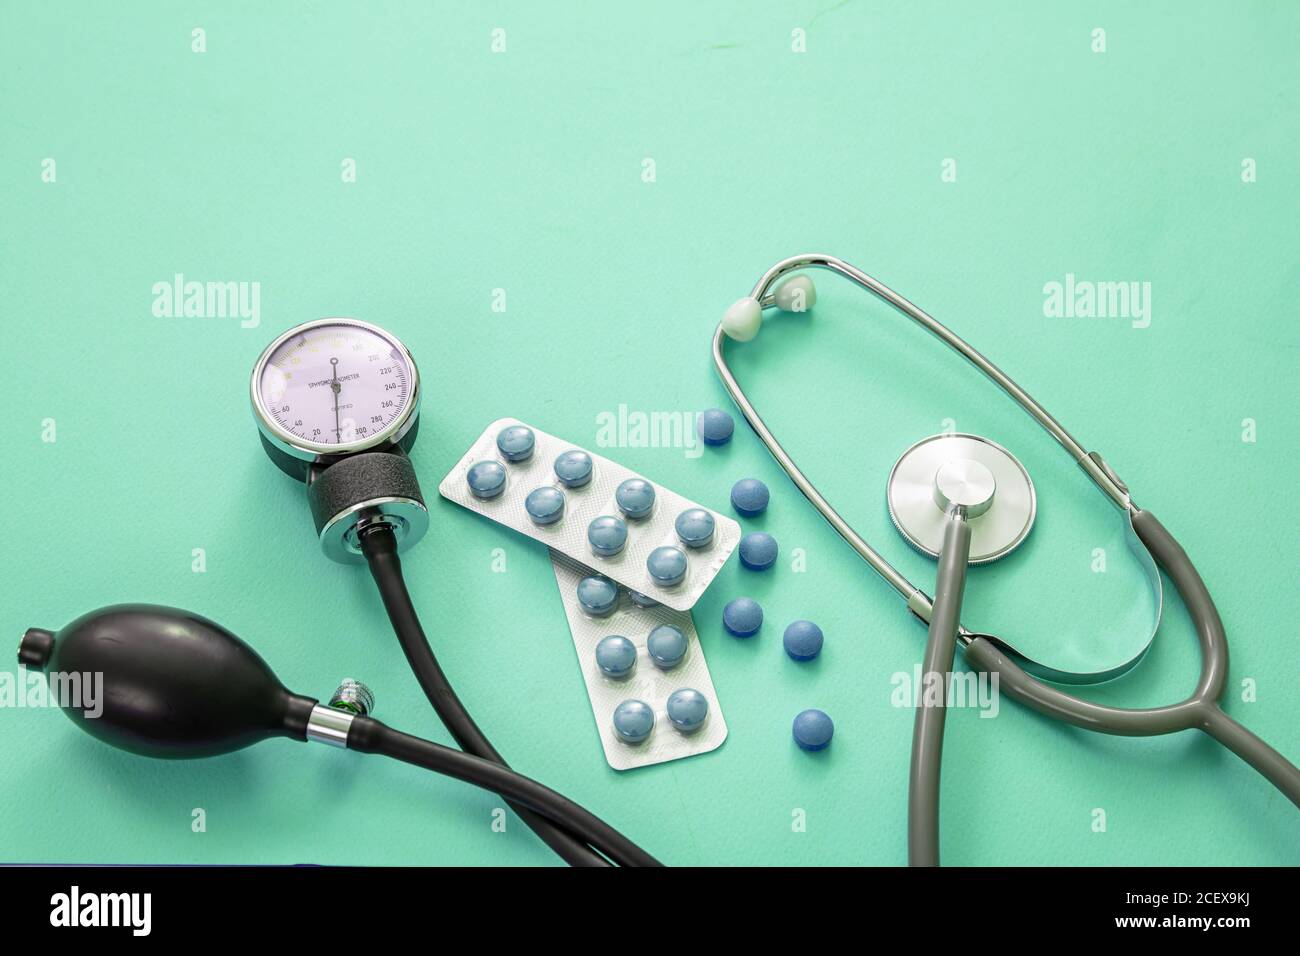 https://c8.alamy.com/comp/2CEX9KJ/blood-pressure-meter-medical-stethoscope-and-medicine-on-pastel-green-blue-color-background-close-up-view-hypertension-treatment-medication-concep-2CEX9KJ.jpg